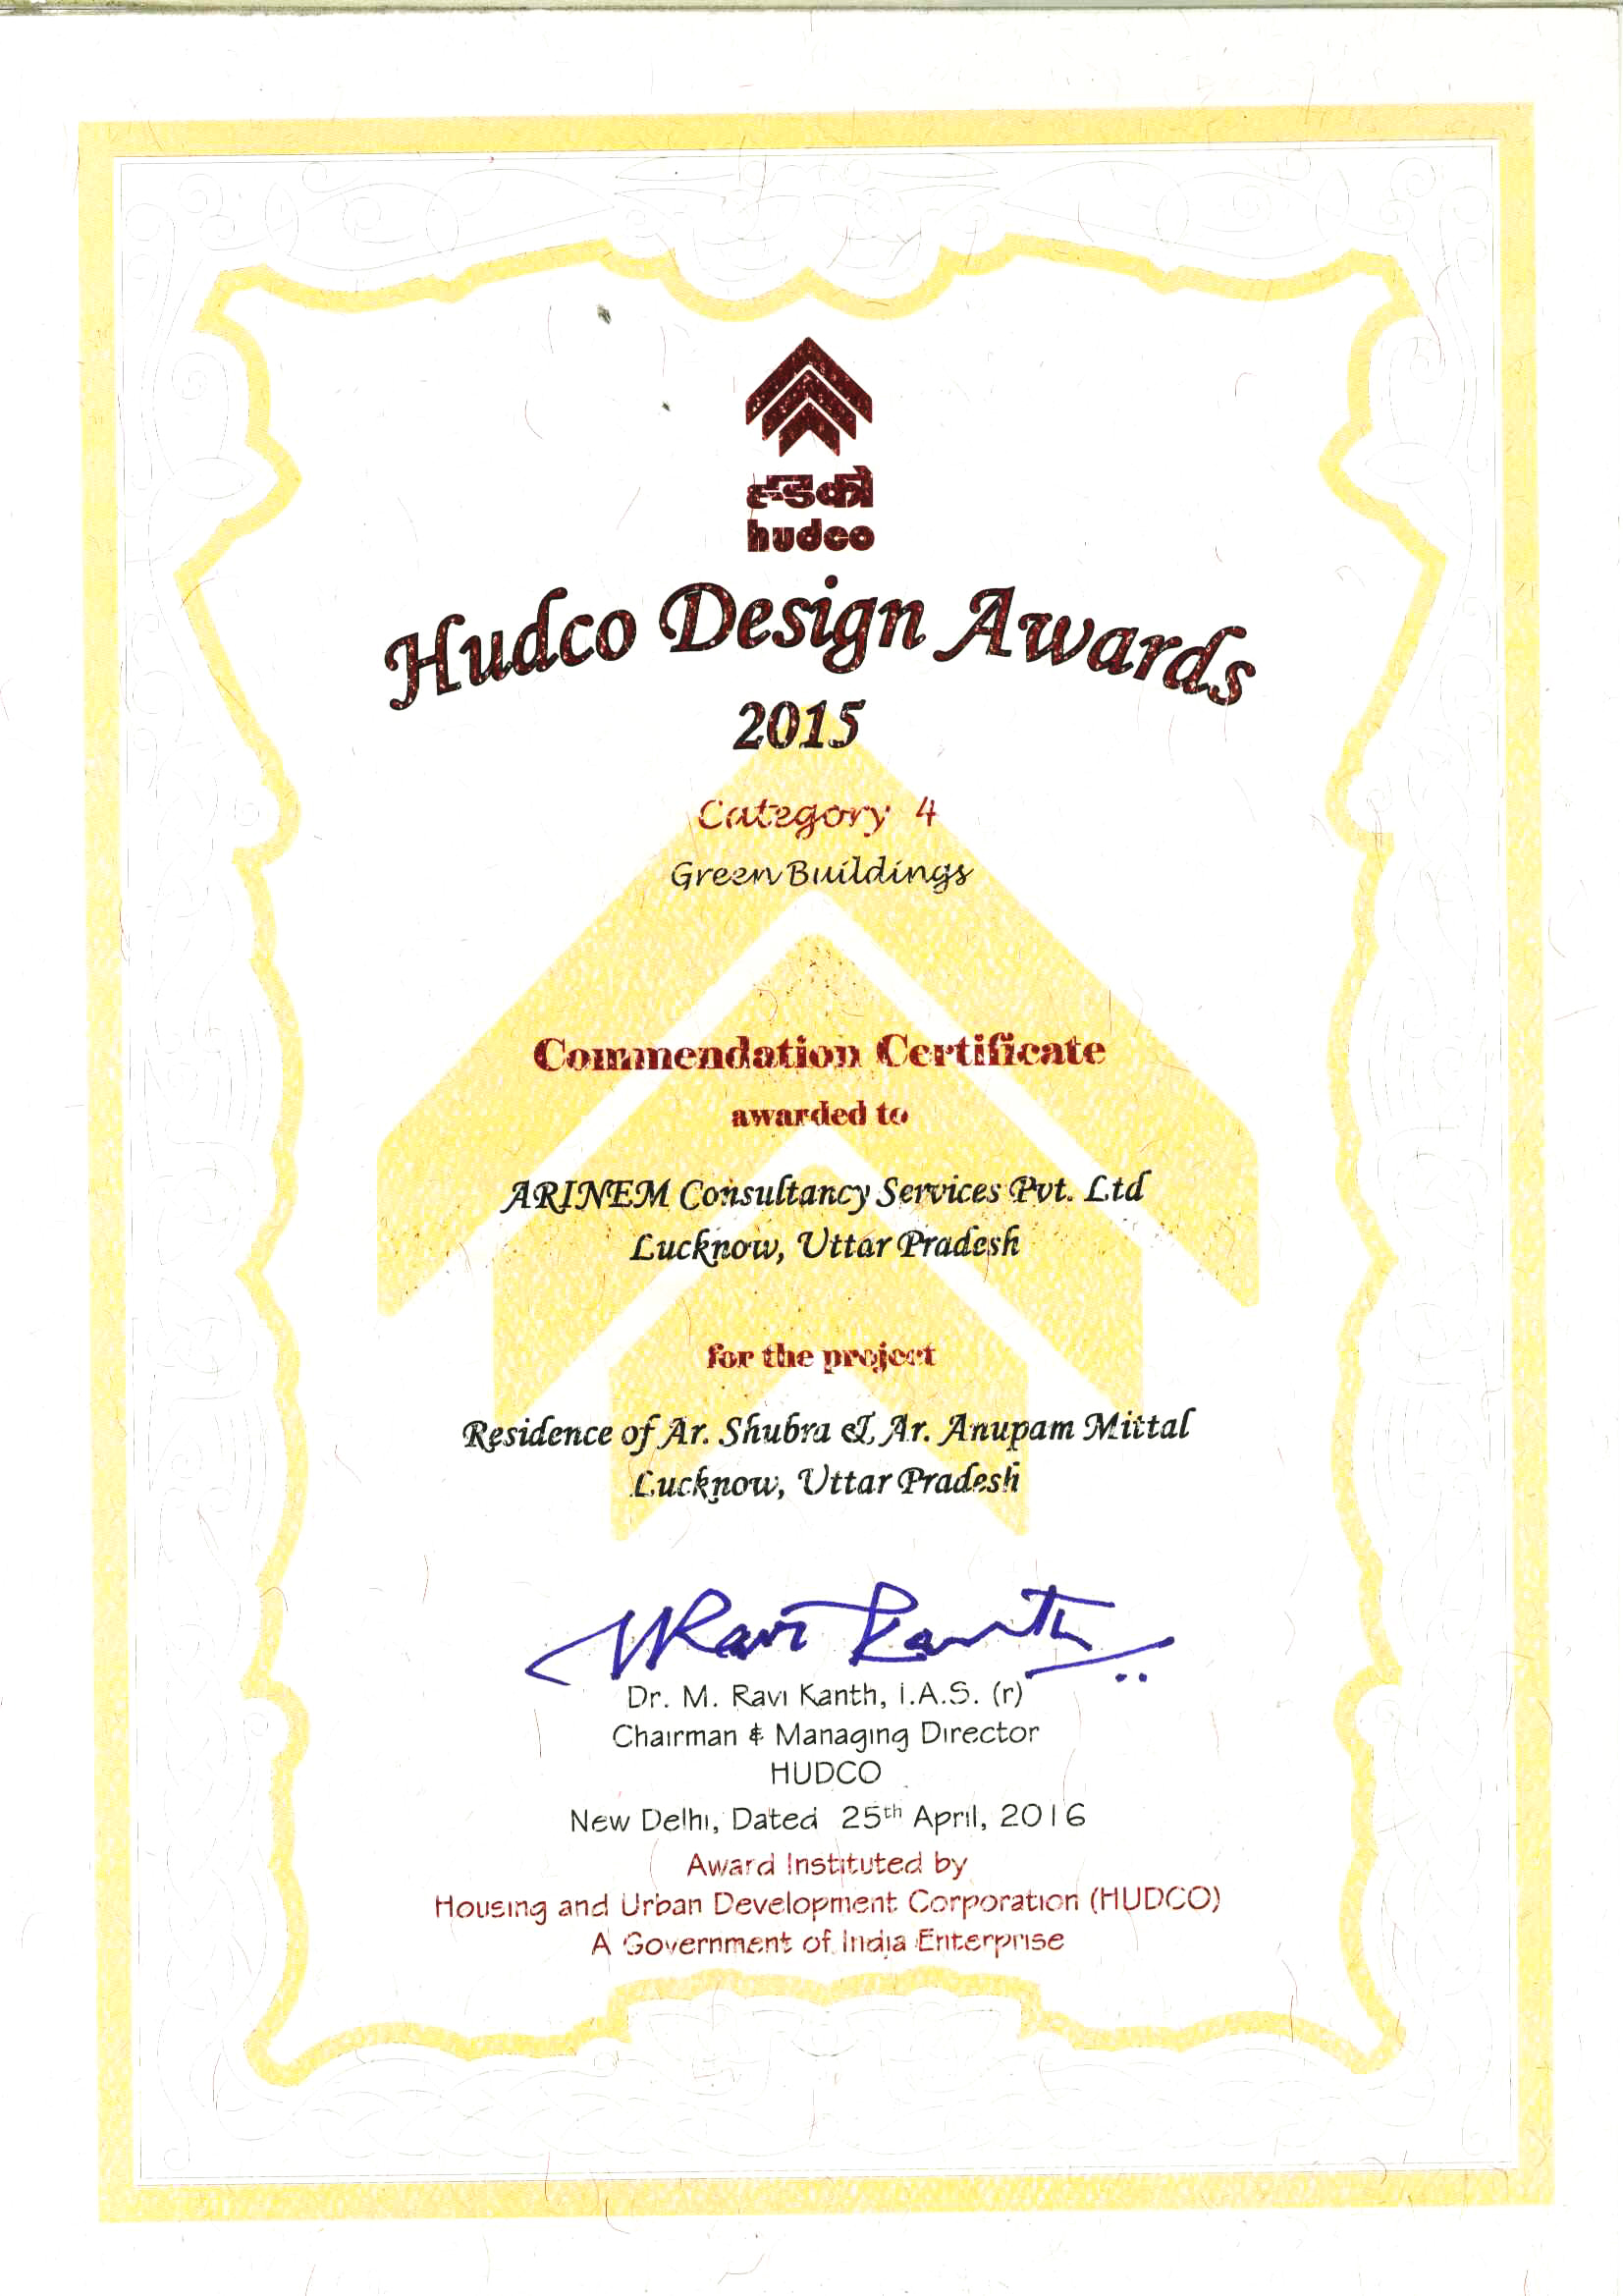 HUDCO Design Award